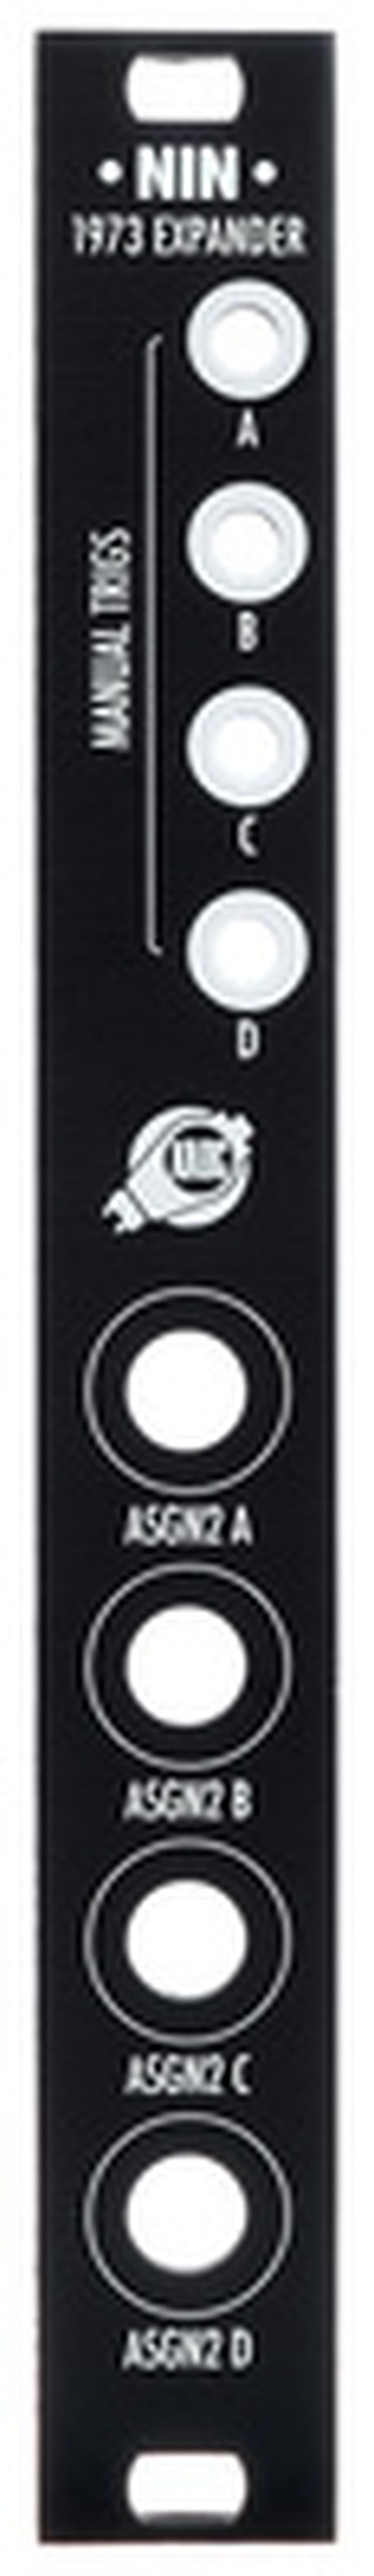 XAOC Devices NIN Black Panel